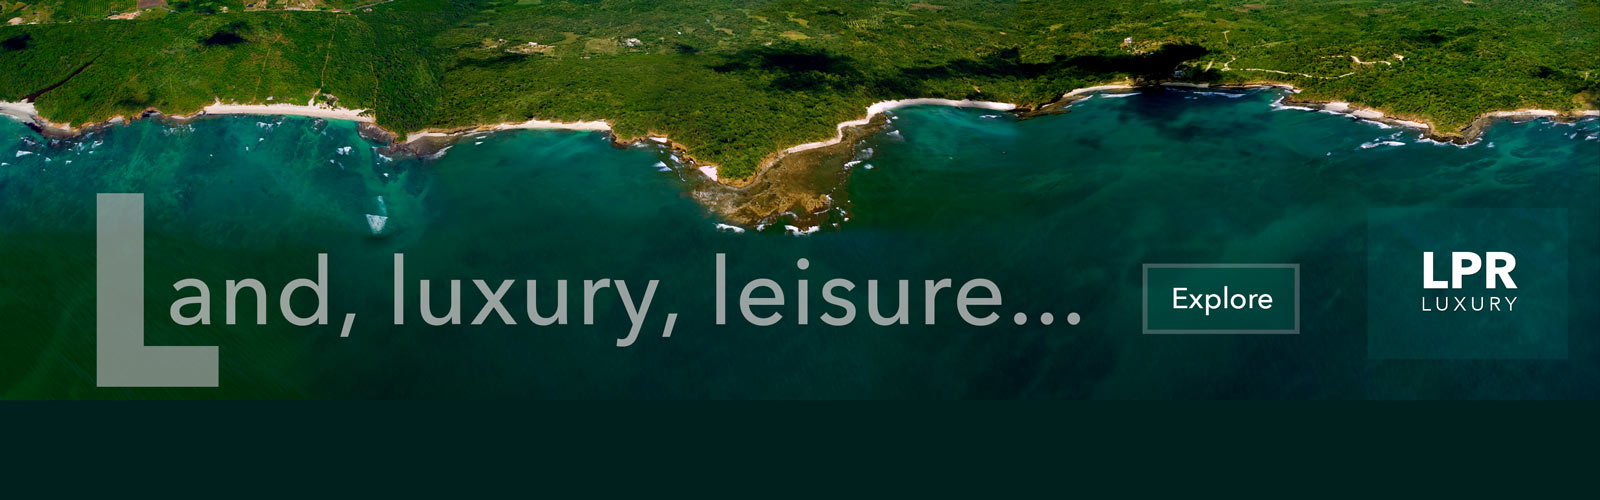 The Mexico Land Catalog - Explore the Coastlines of Mexico - Luxury Residential Development Land for Sale in Mexico - Punta Mita - Puerto Vallarta - LPR Luxury Intaernational